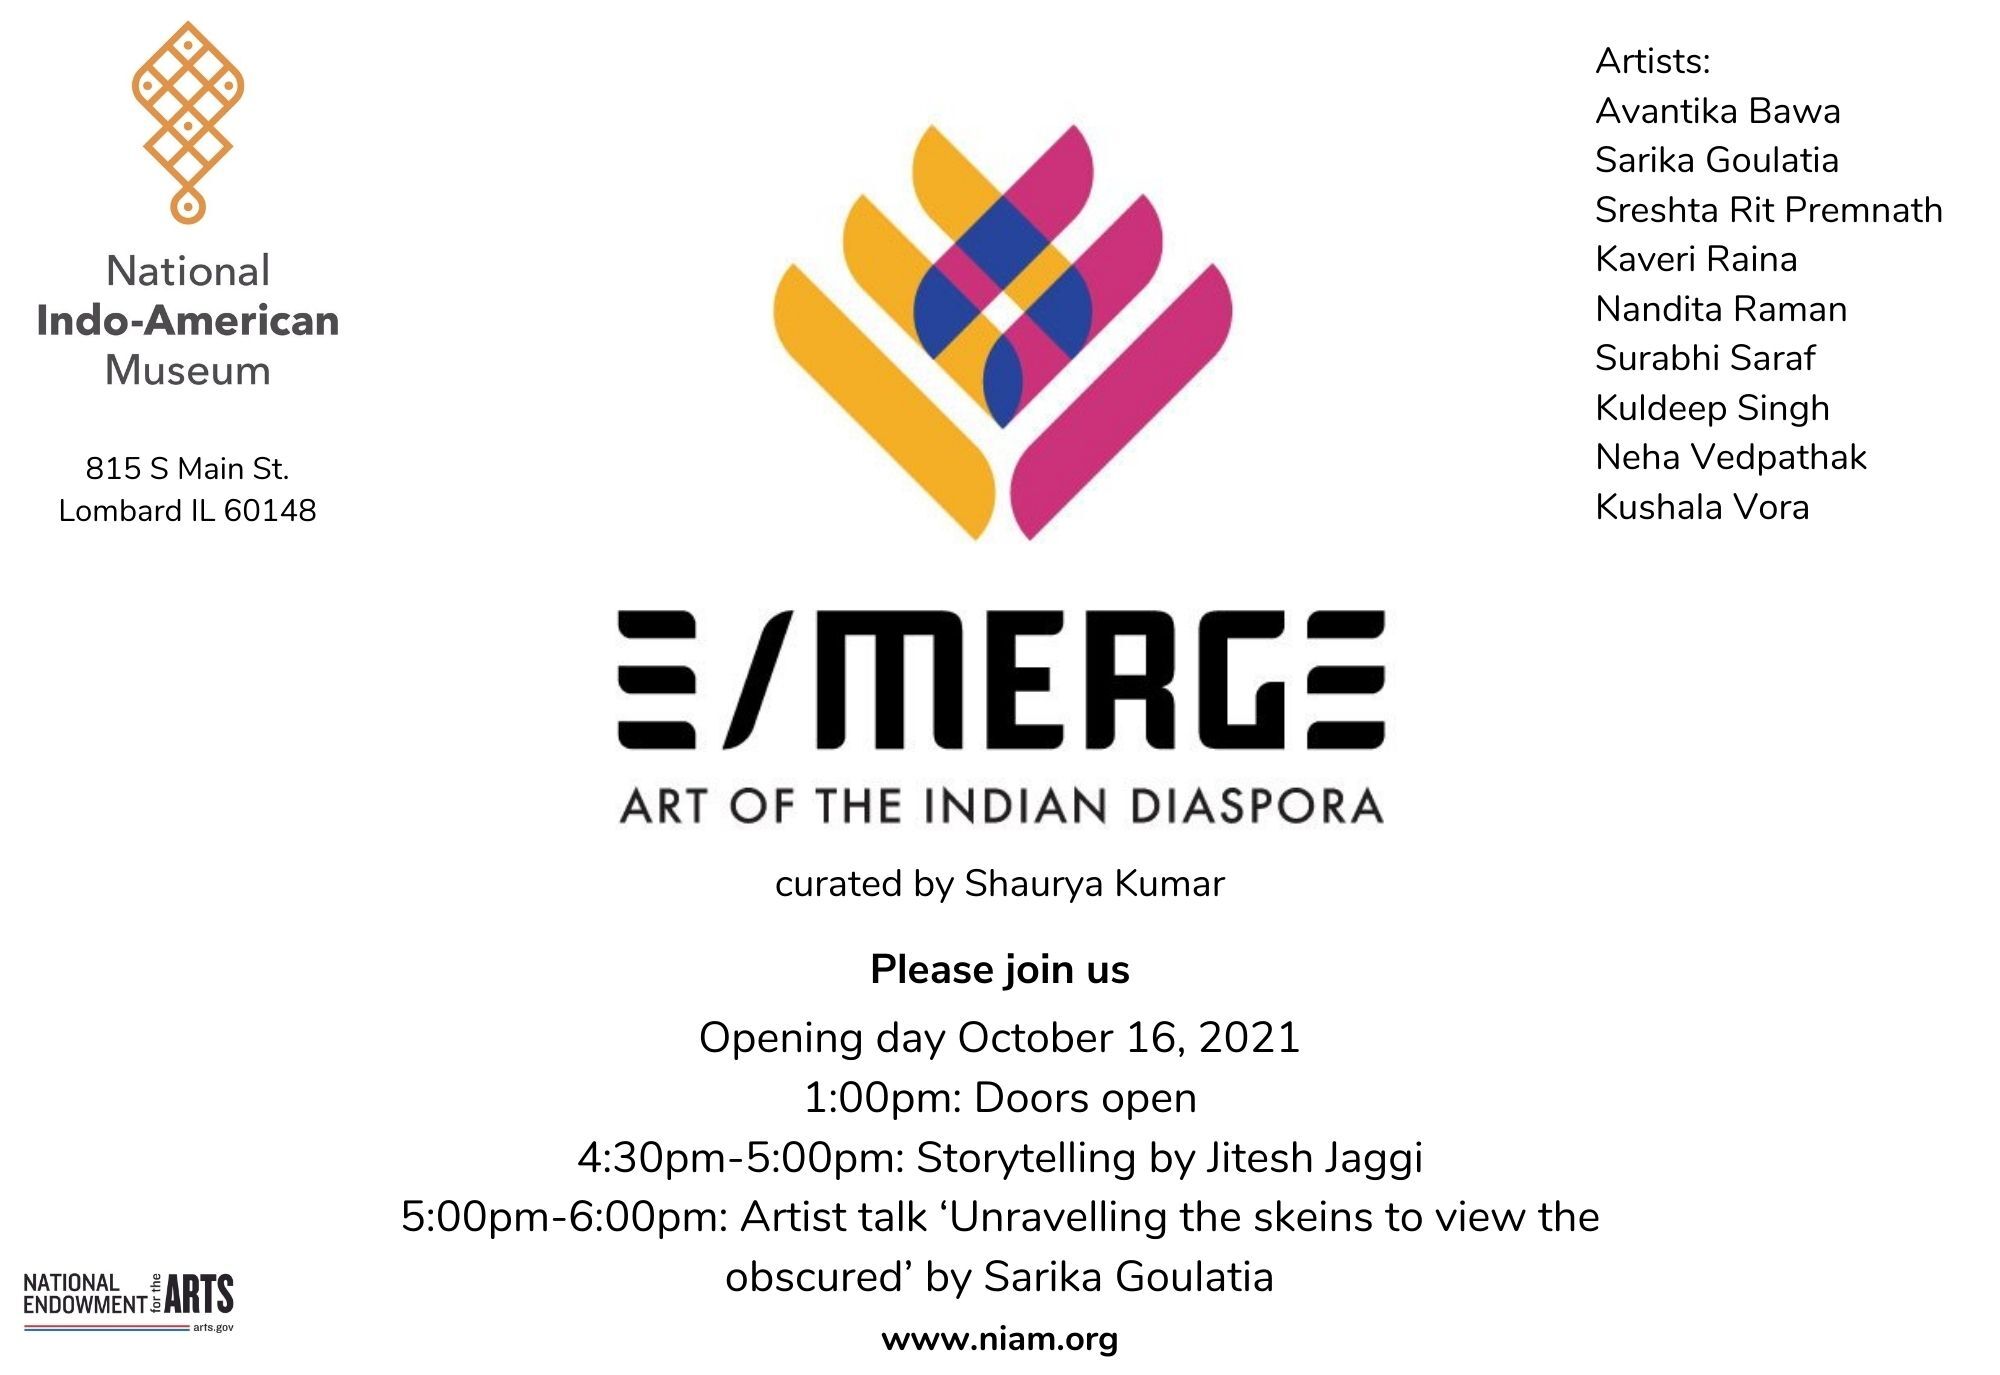 E/MERGE Art of the Indian Diaspora